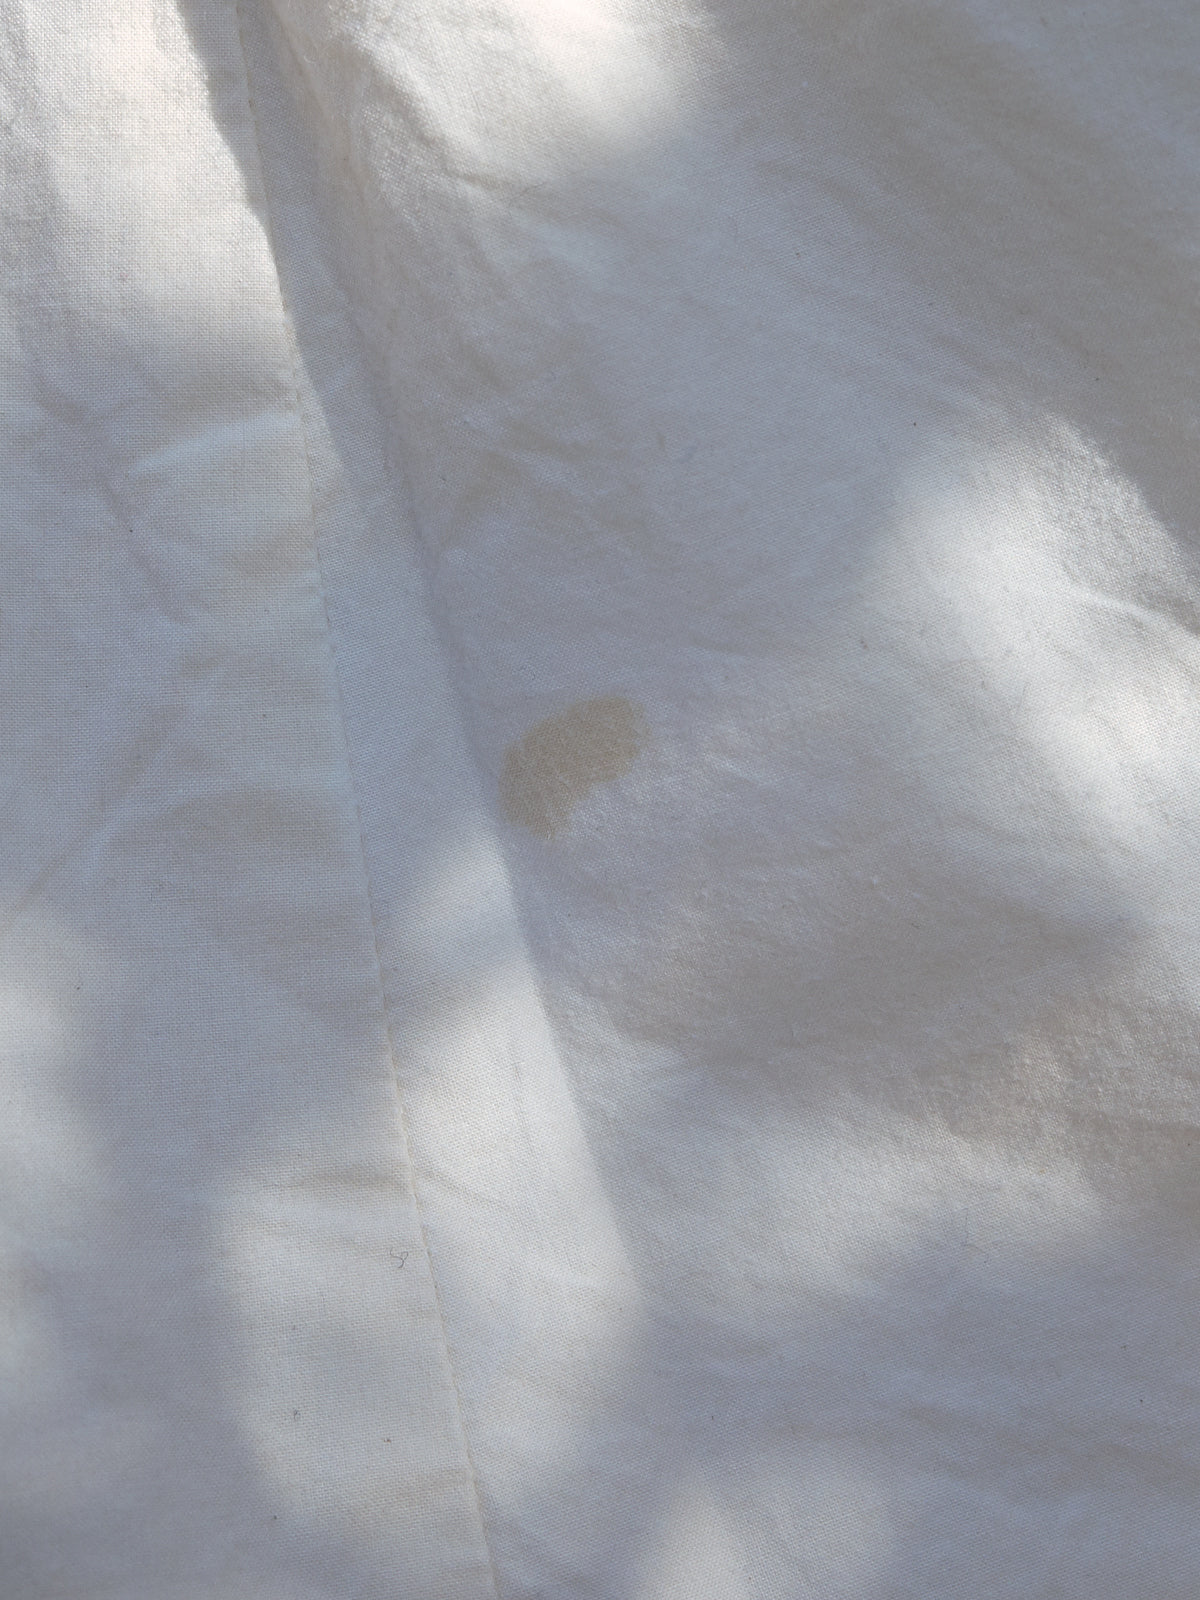 dirk van saene unbleached cotton canvas 'shrink to fit' blazer - SS1999